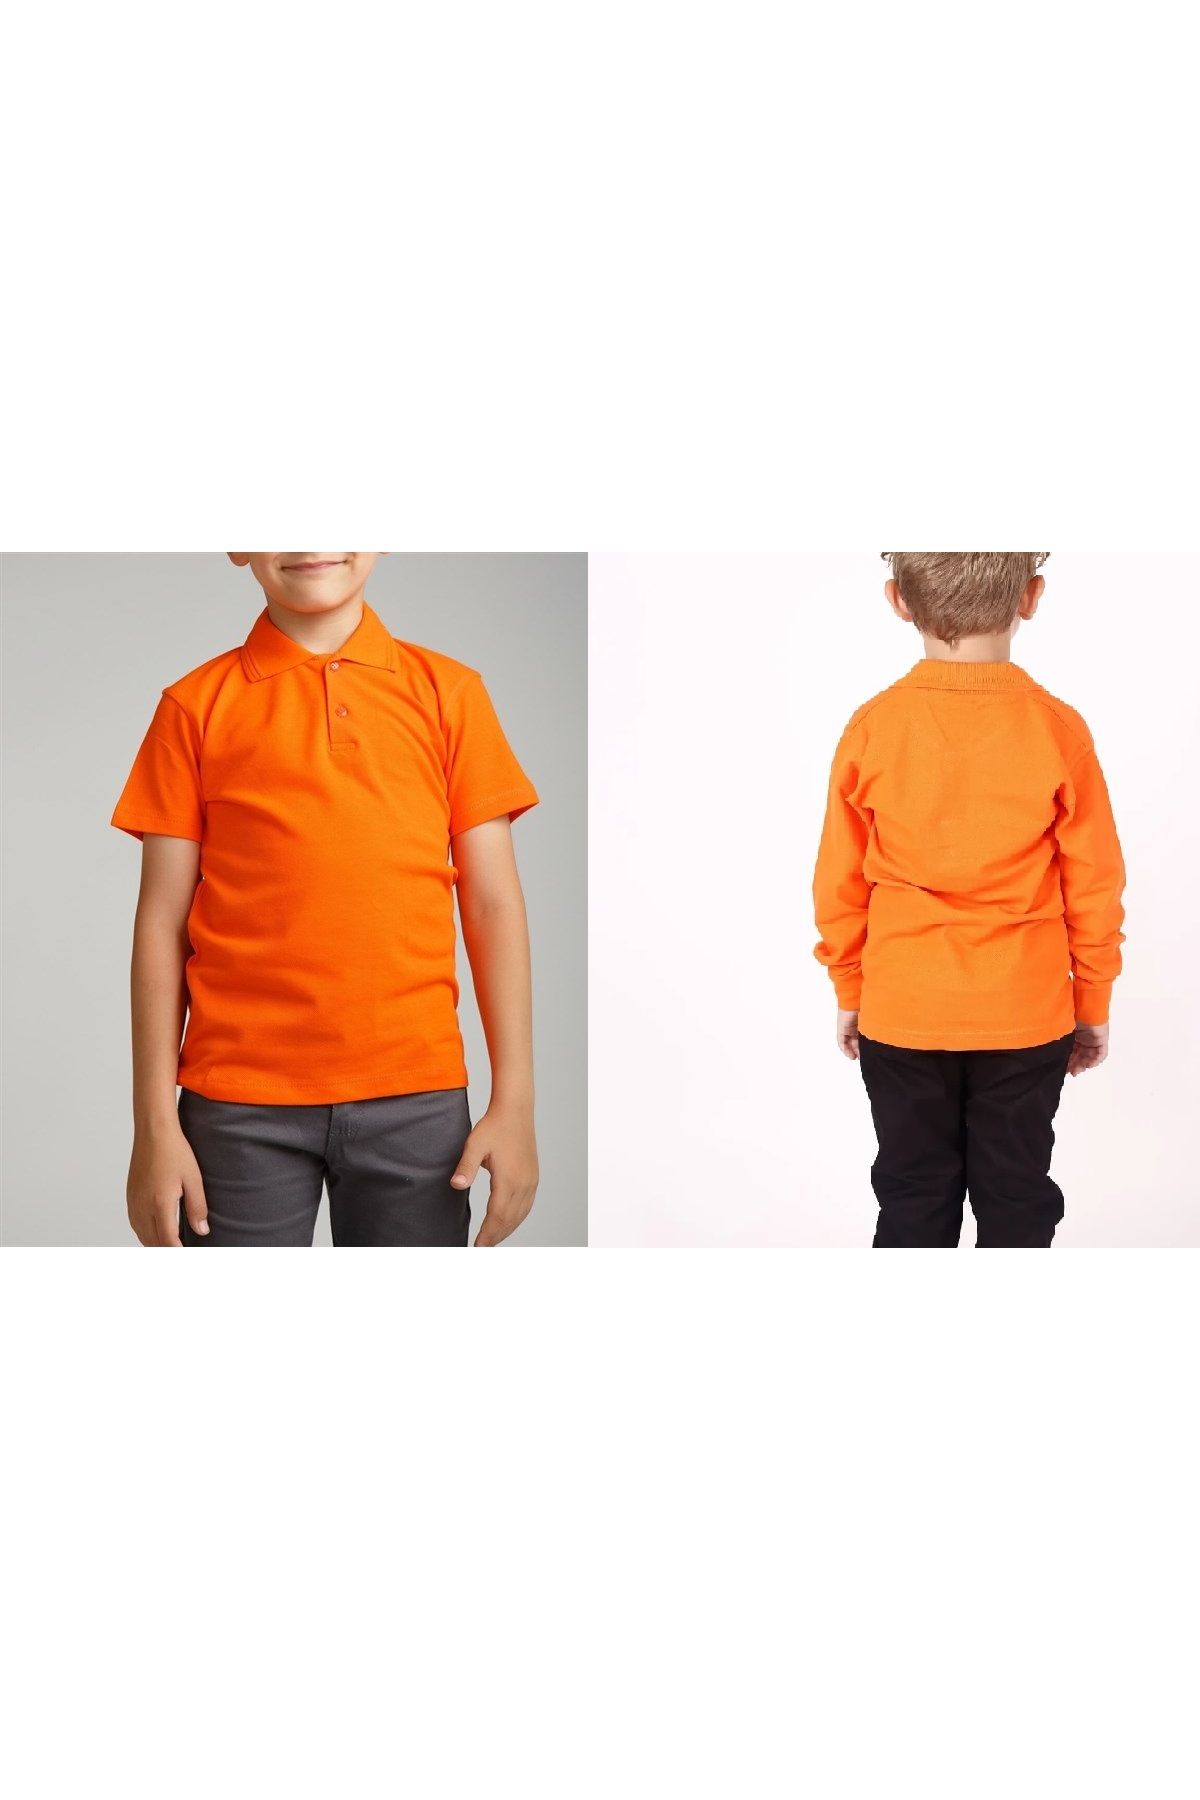 FATELLA Unısex Çocuk Kısa - Uzun Kol Normal Kalıp Polo Yaka Düz Renk Okul Penye Lakost T-shirt 2'li Paket